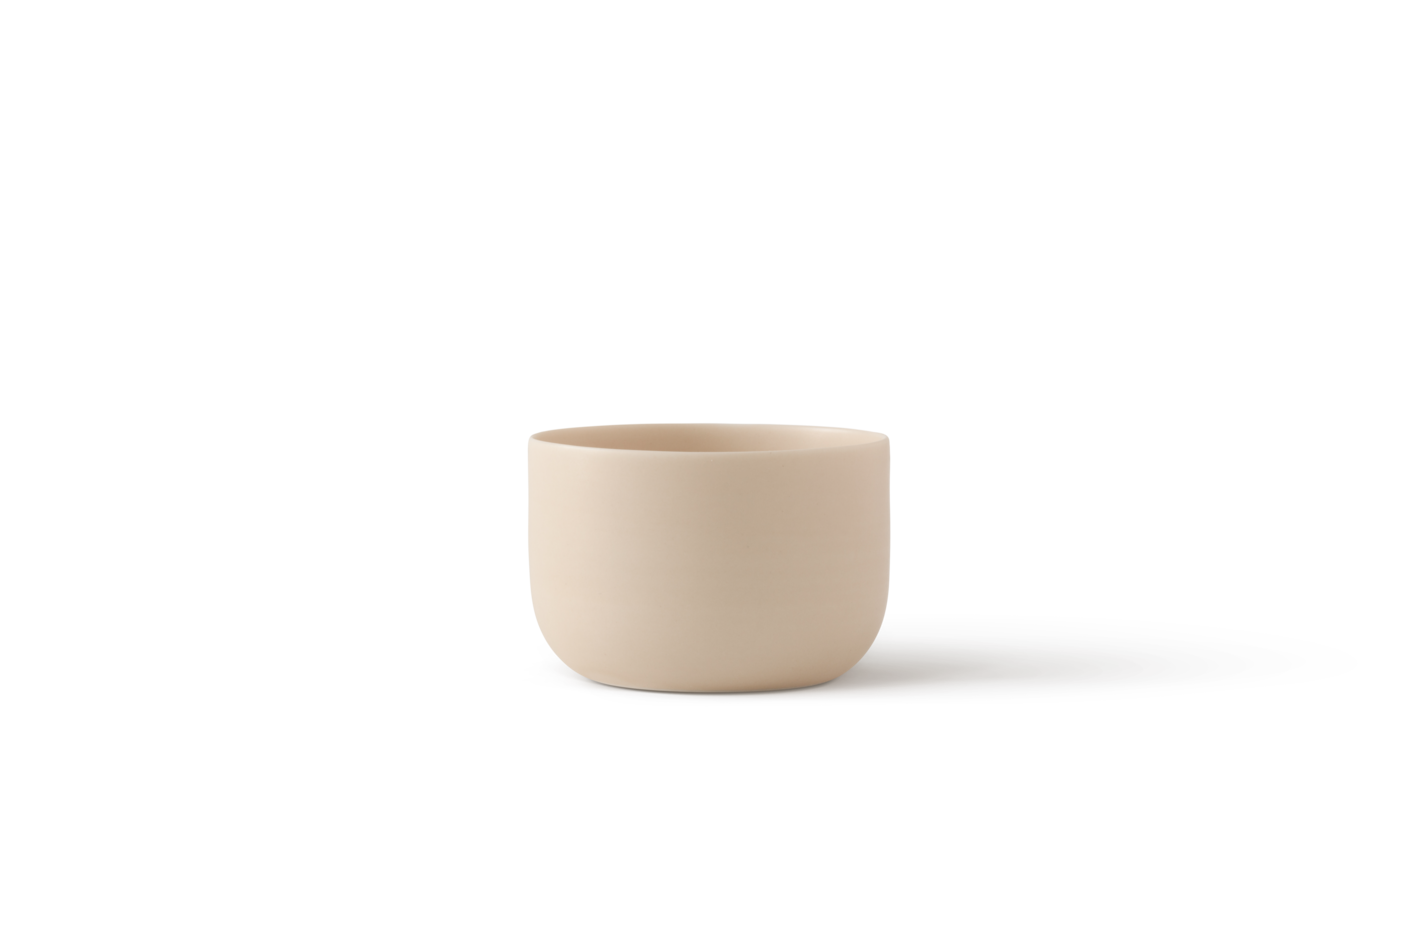 【MAOMI】ドイツ食器・陶器 | KAYA TEA / CAPPUCCINO CUP Greige Ecru